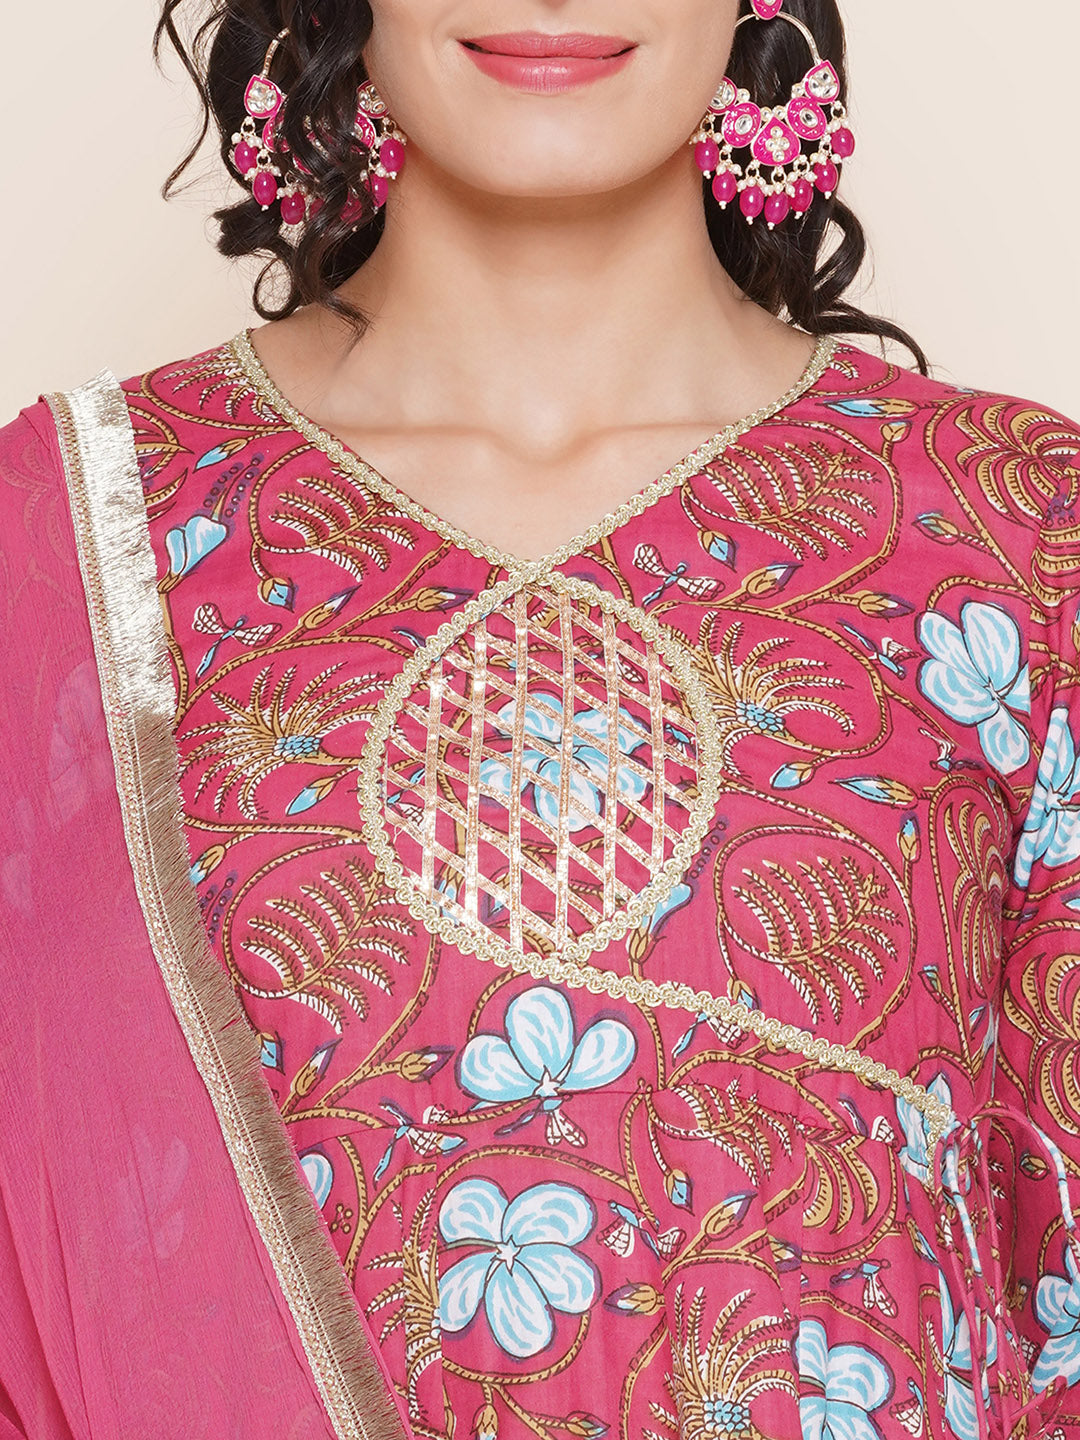 Pink Floral Printed Gotta Detailing Flared Anarkali Kurta & Pink Multi Printed Pant with Dupatta